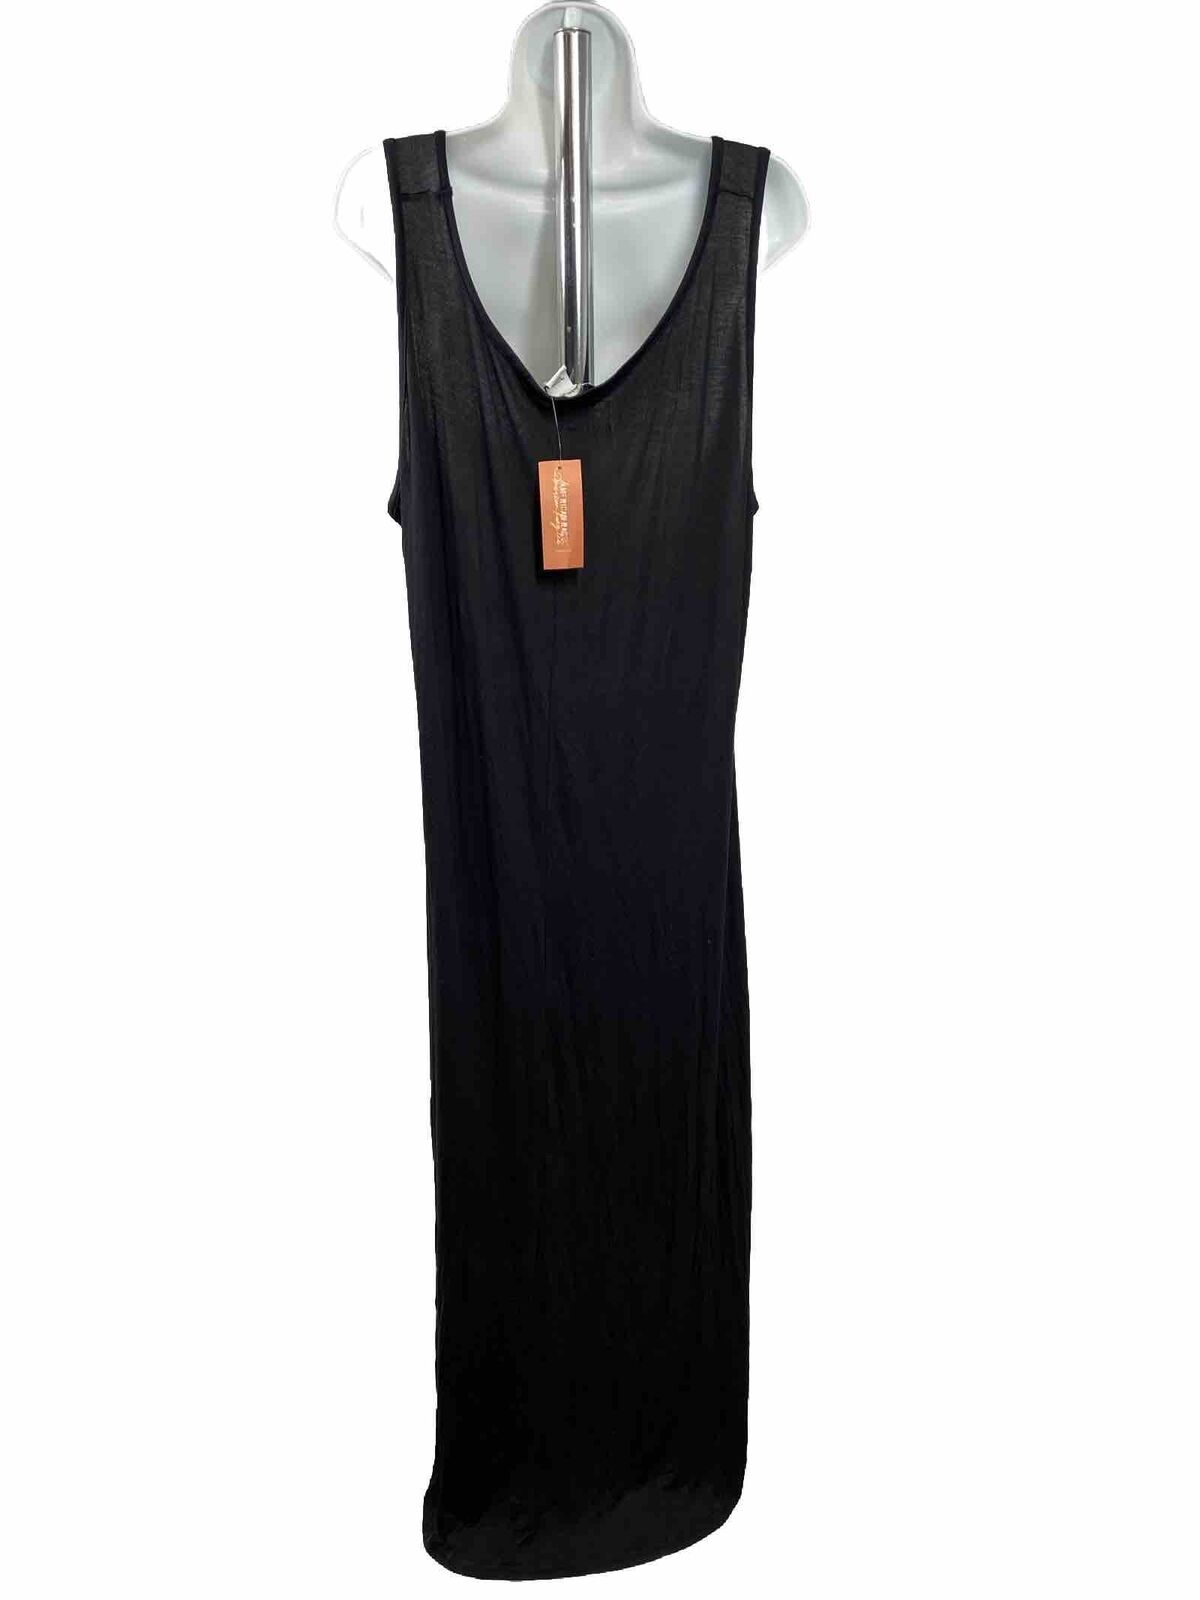 NEW American Rag Women's Black Sleeveless High Low Dress - 2X Plus